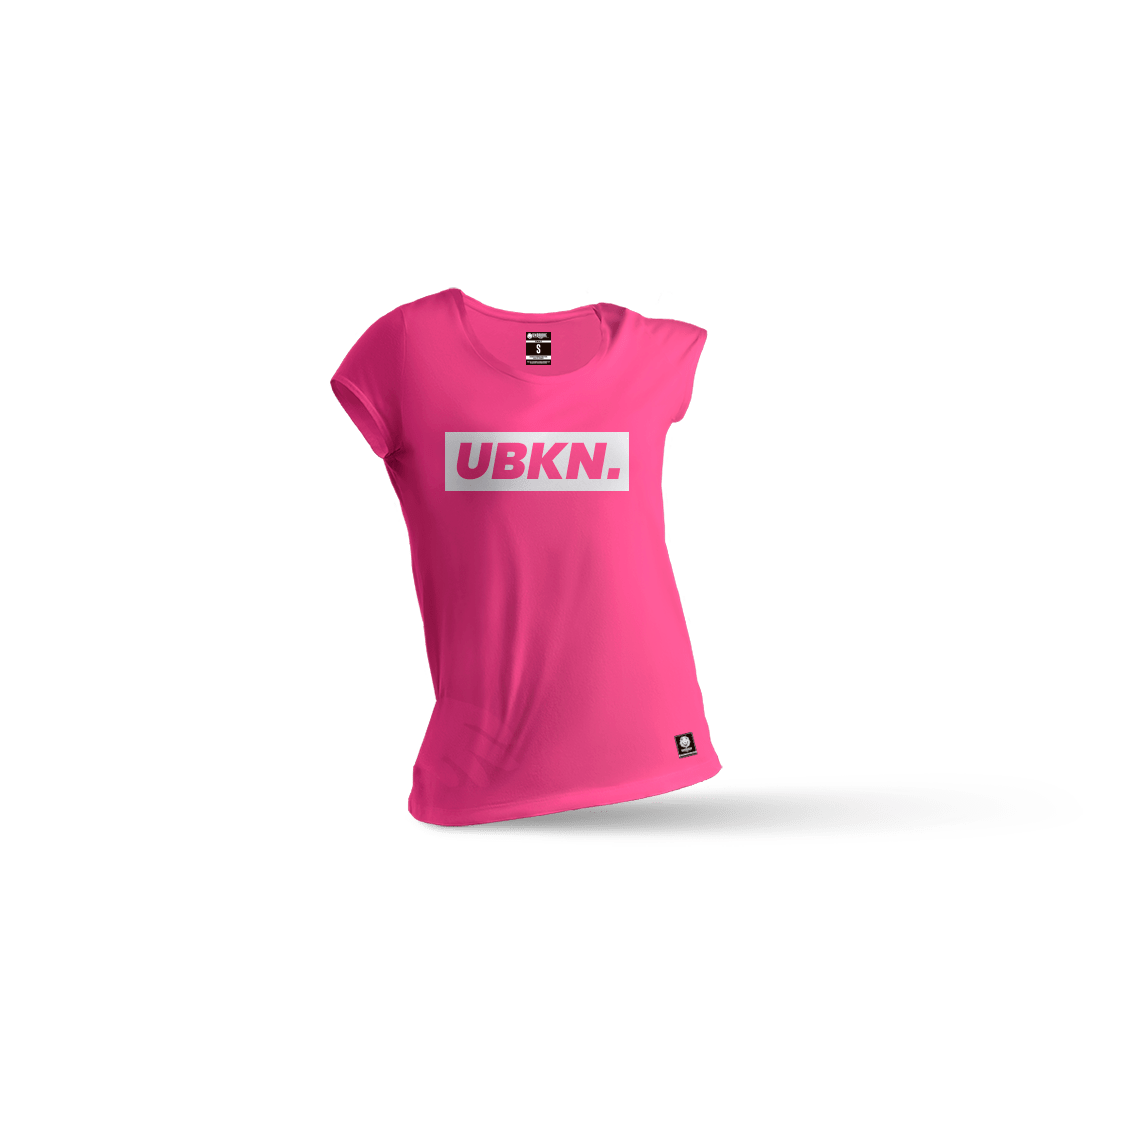 Camiseta topic Pink - Unbroken Sports Wear 